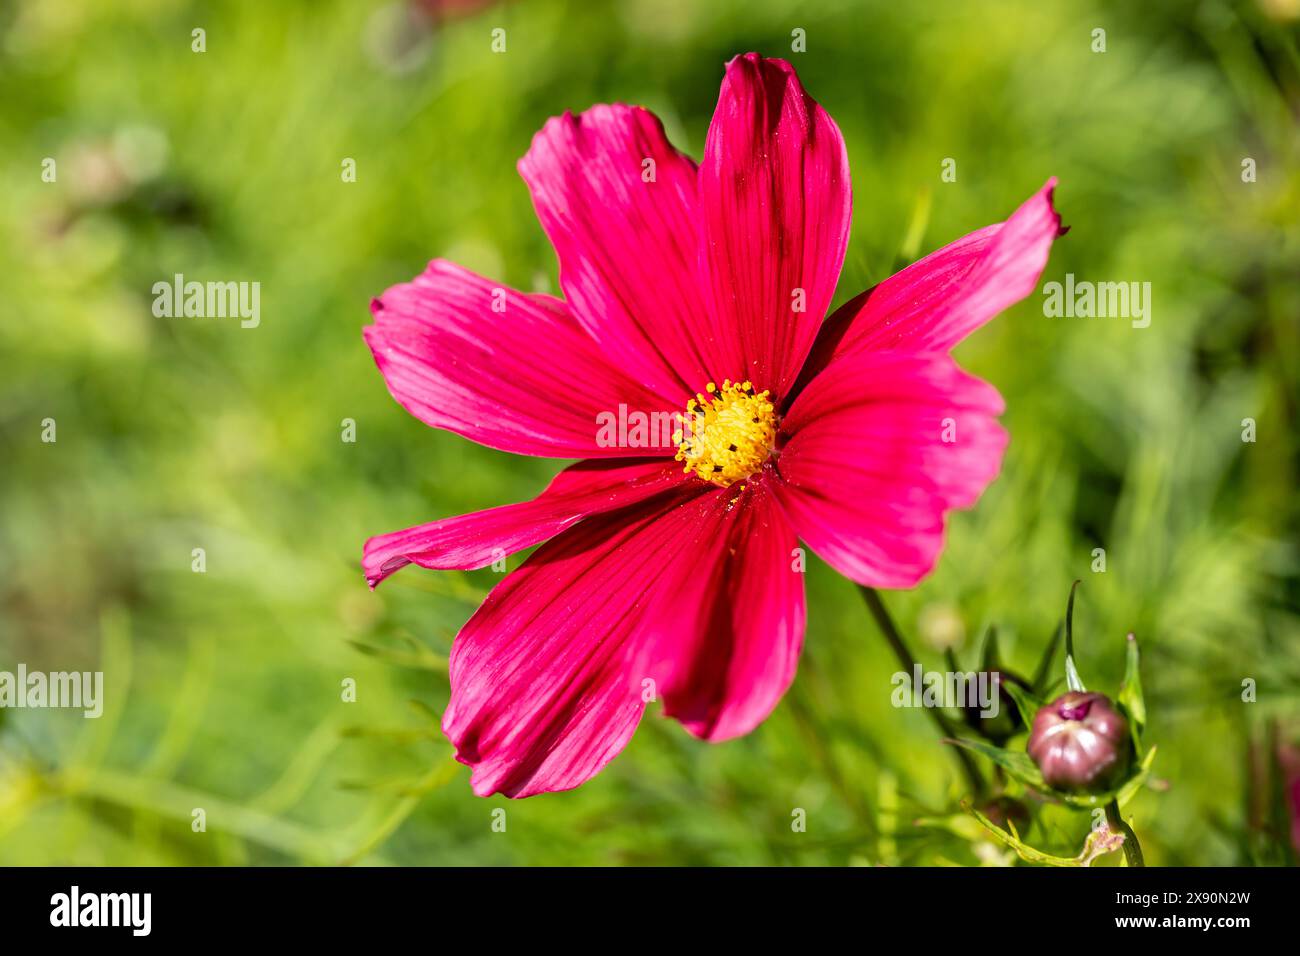 Vibrant magenta Cosmos Bipinnatus flower Stock Photo